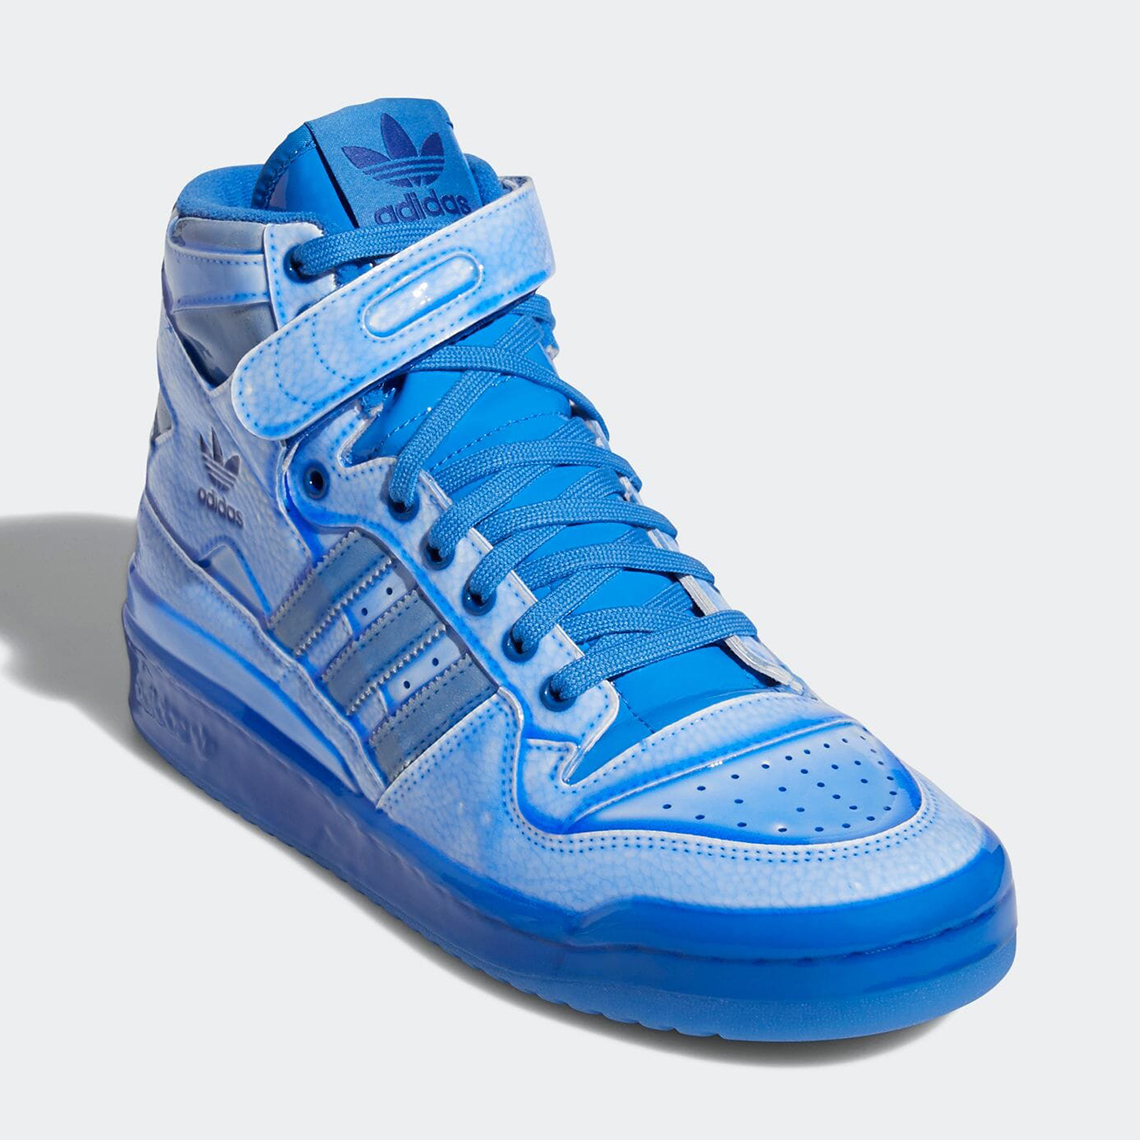 Jeremy Scott Adidas Forum Hi Dipped Blue G54995 2